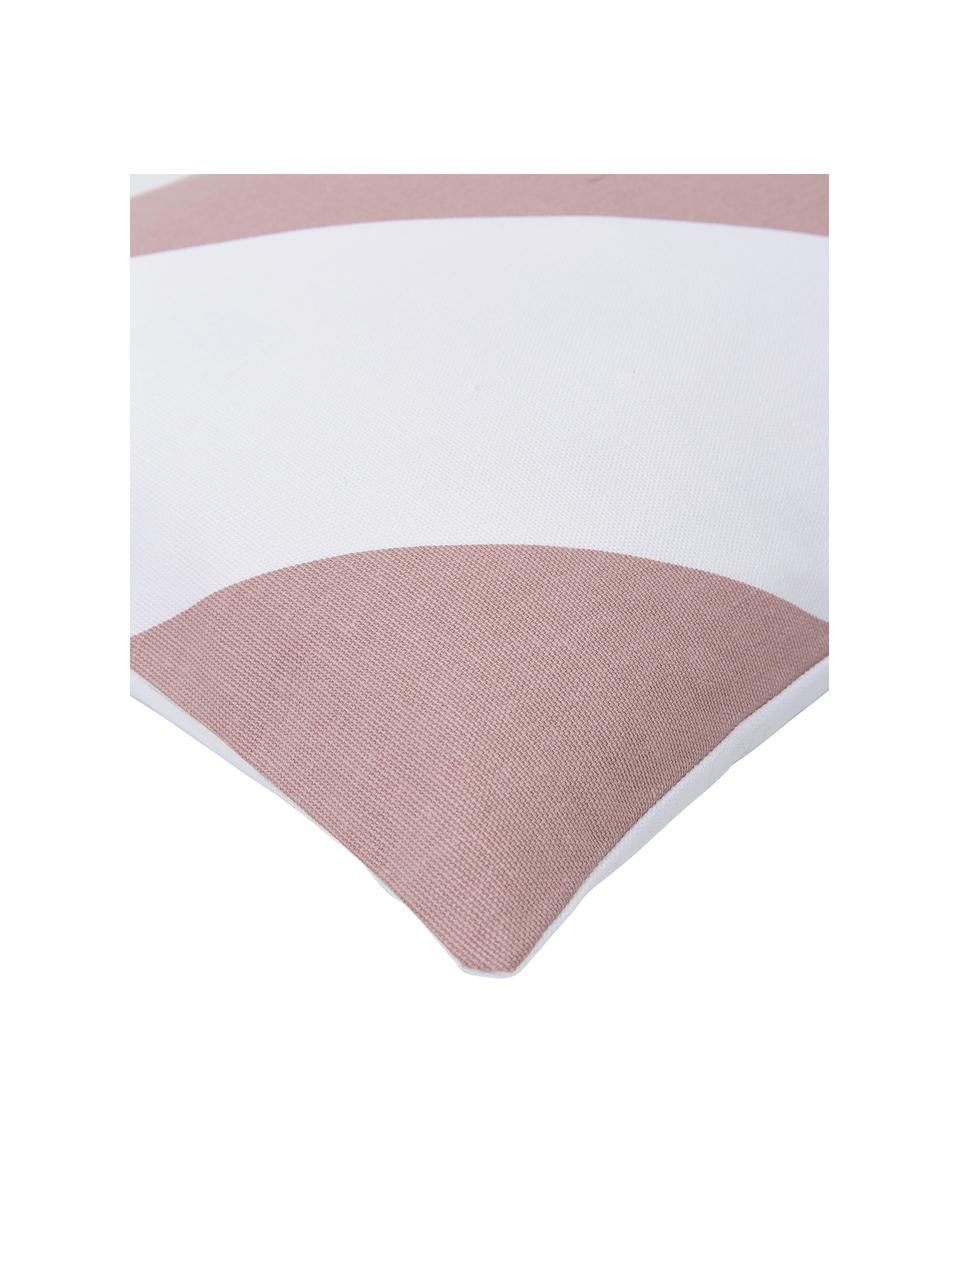 Federa arredo a strisce rosa cipria/bianco Ren, 100% cotone, Bianco, rosa cipria, Larg. 30 x Lung. 50 cm